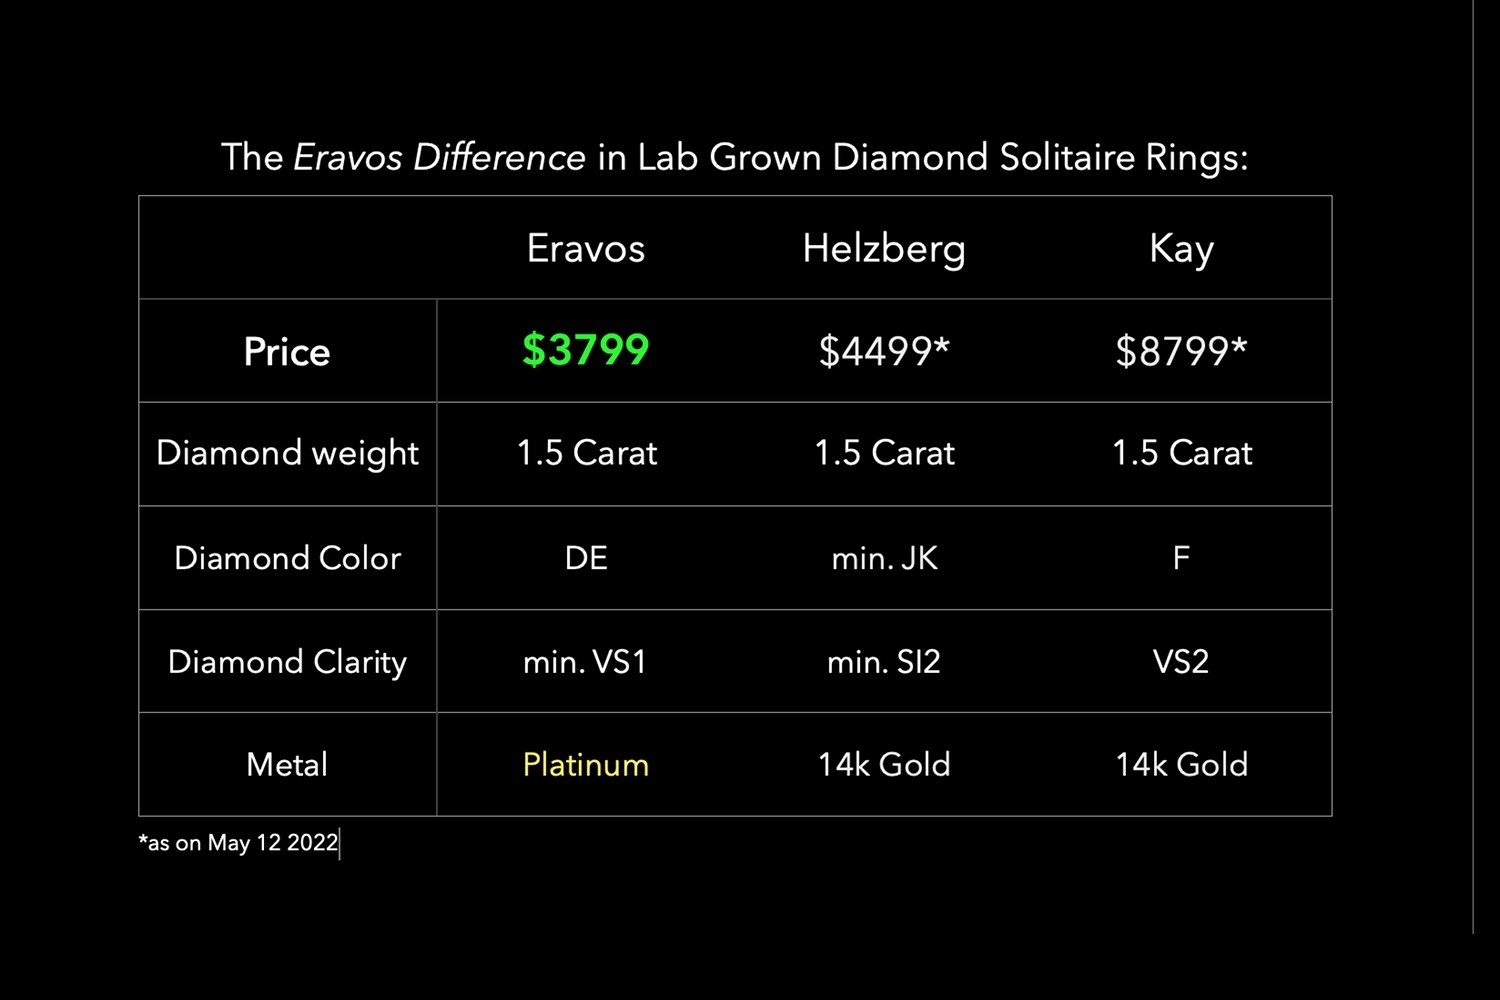 Eravos lab grown diamond solitaire 1.5 carat ring price comparison with competitiors